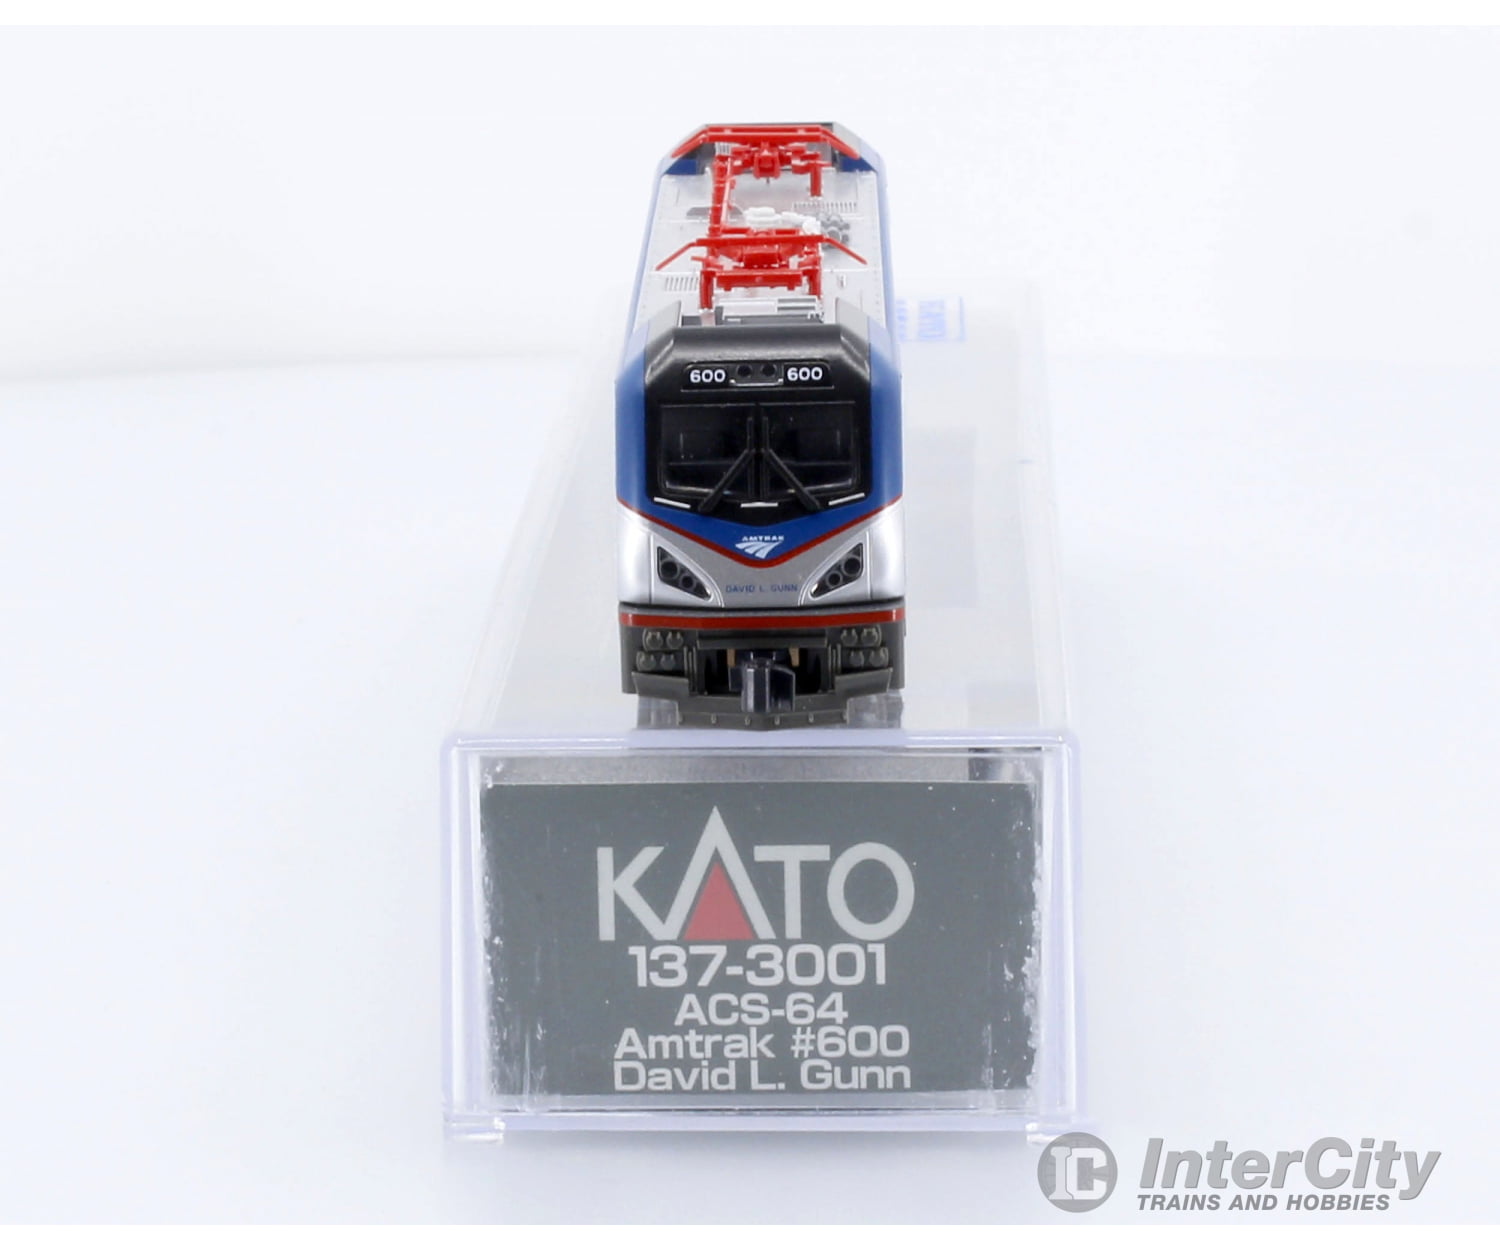 Kato N Scale Amtrak Acs-64 Electric Locomotive #600 David L. Gunn W Tcs Dcc Locomotives & Railcars